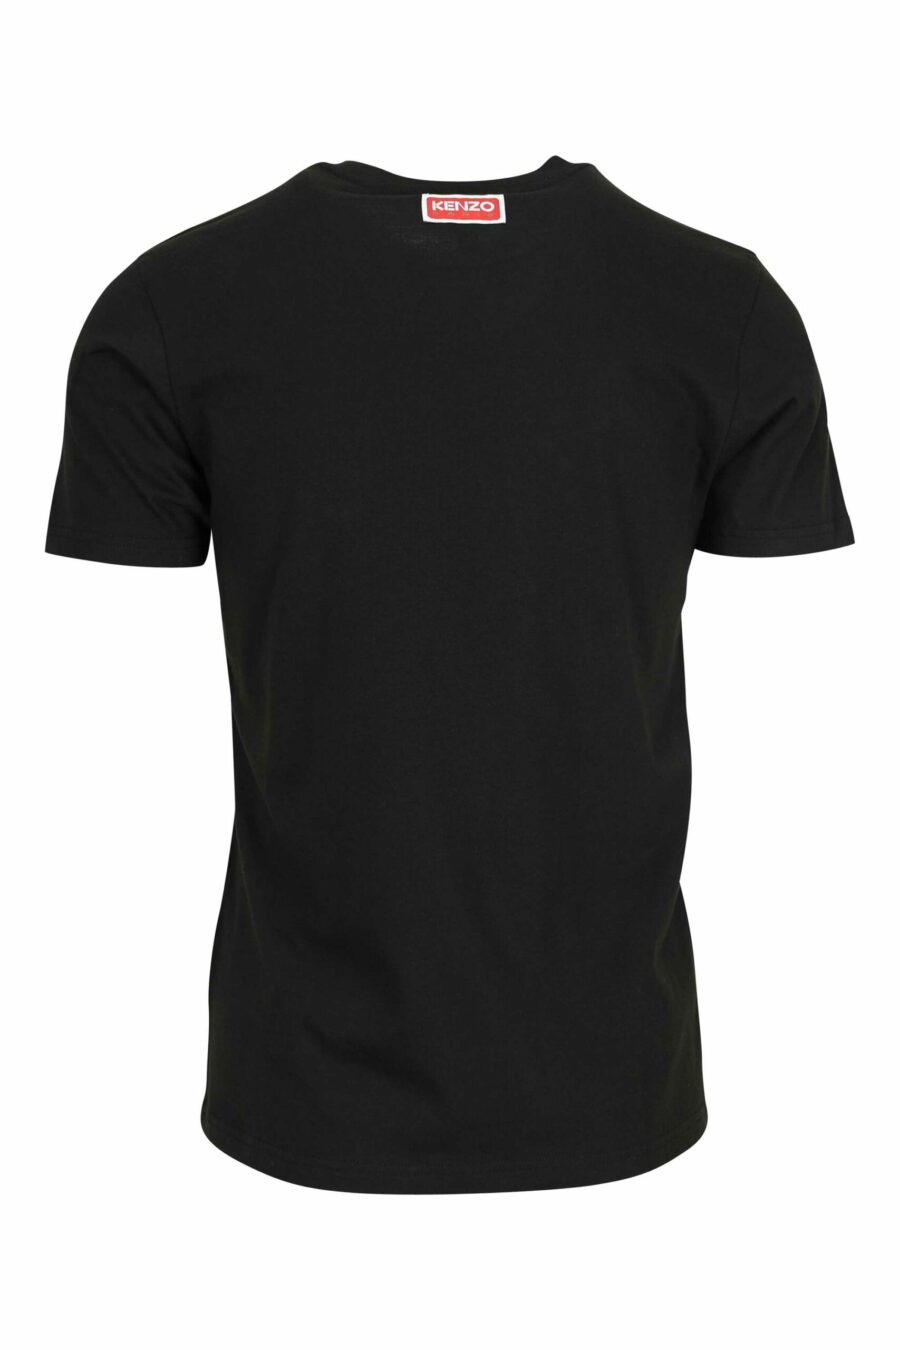 Camiseta negra "slim" con minilogo tigre - 3612230625020 1 scaled